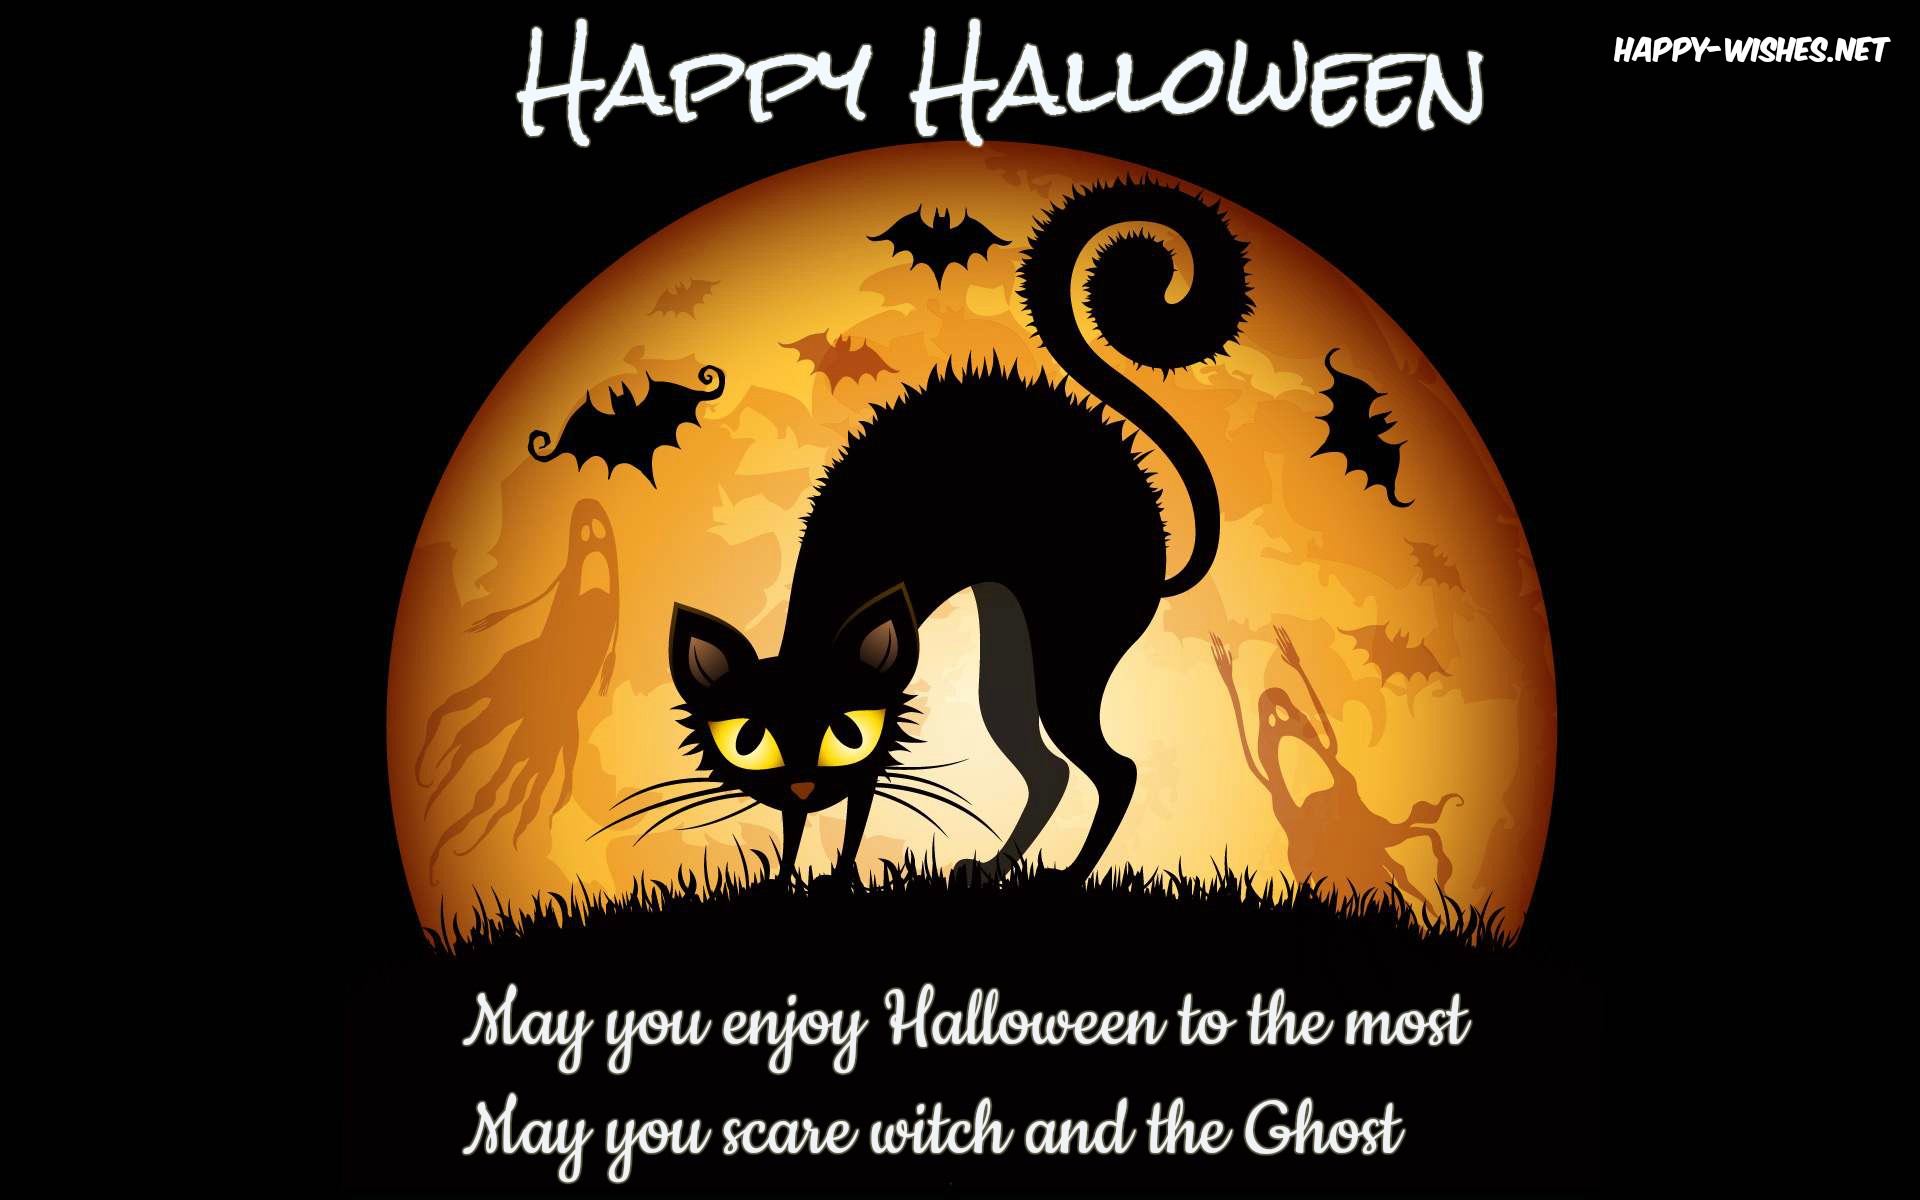 Best Halloween messages for kids